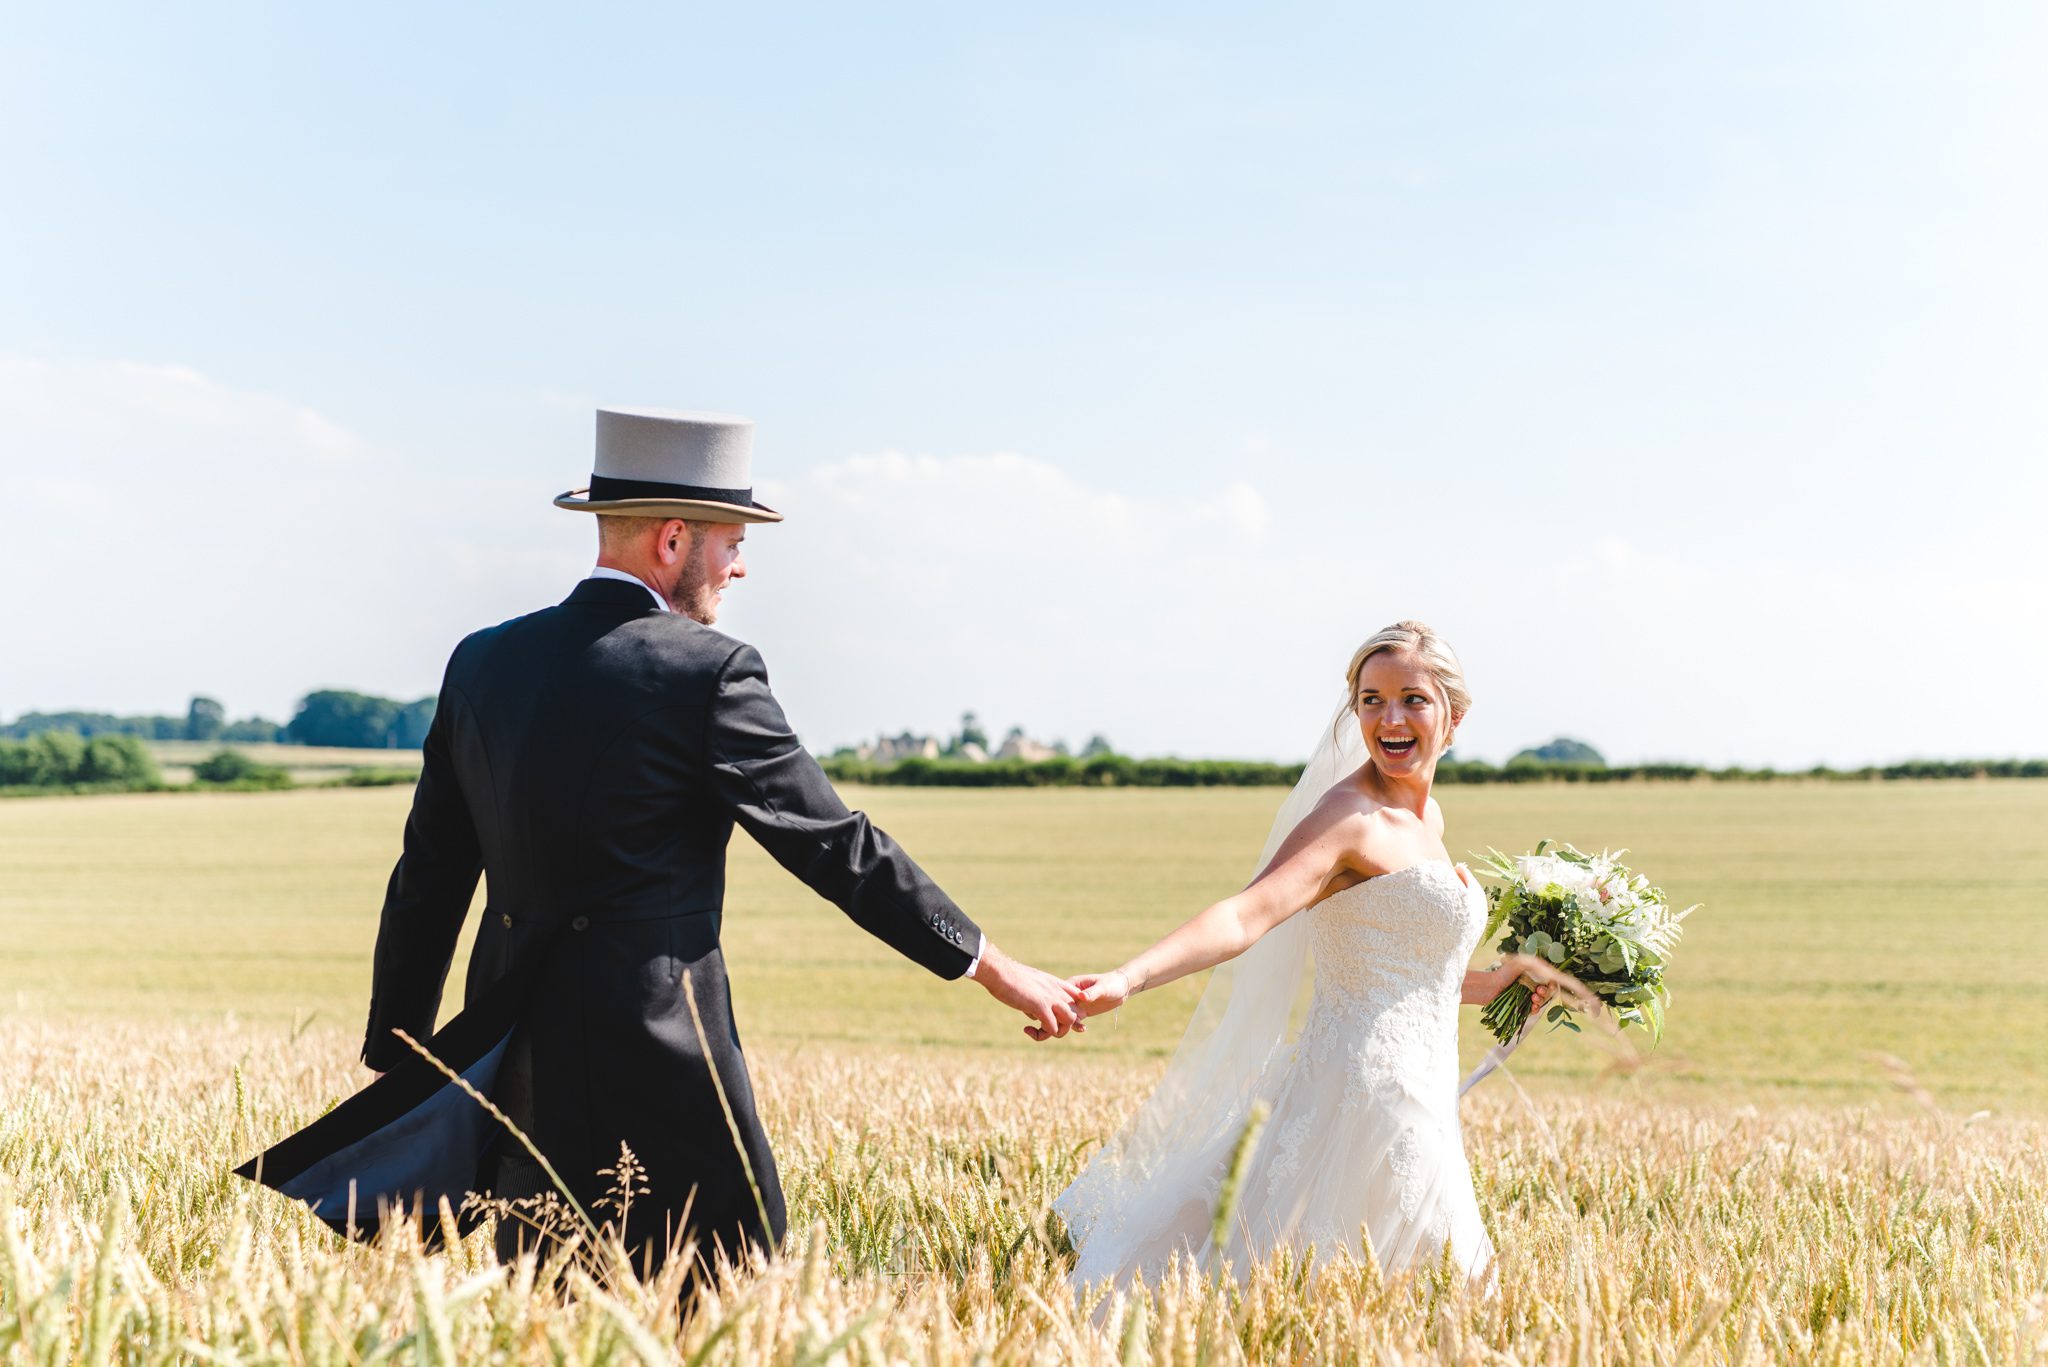 A bride leading her groom through a cornfield